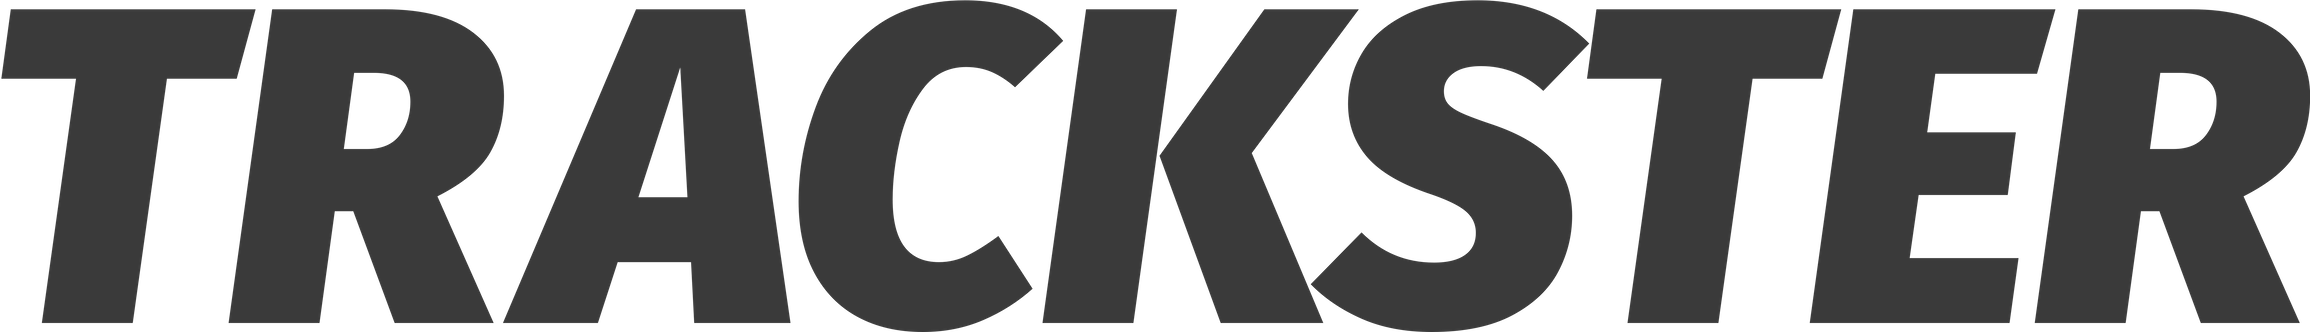 Trackster Logo